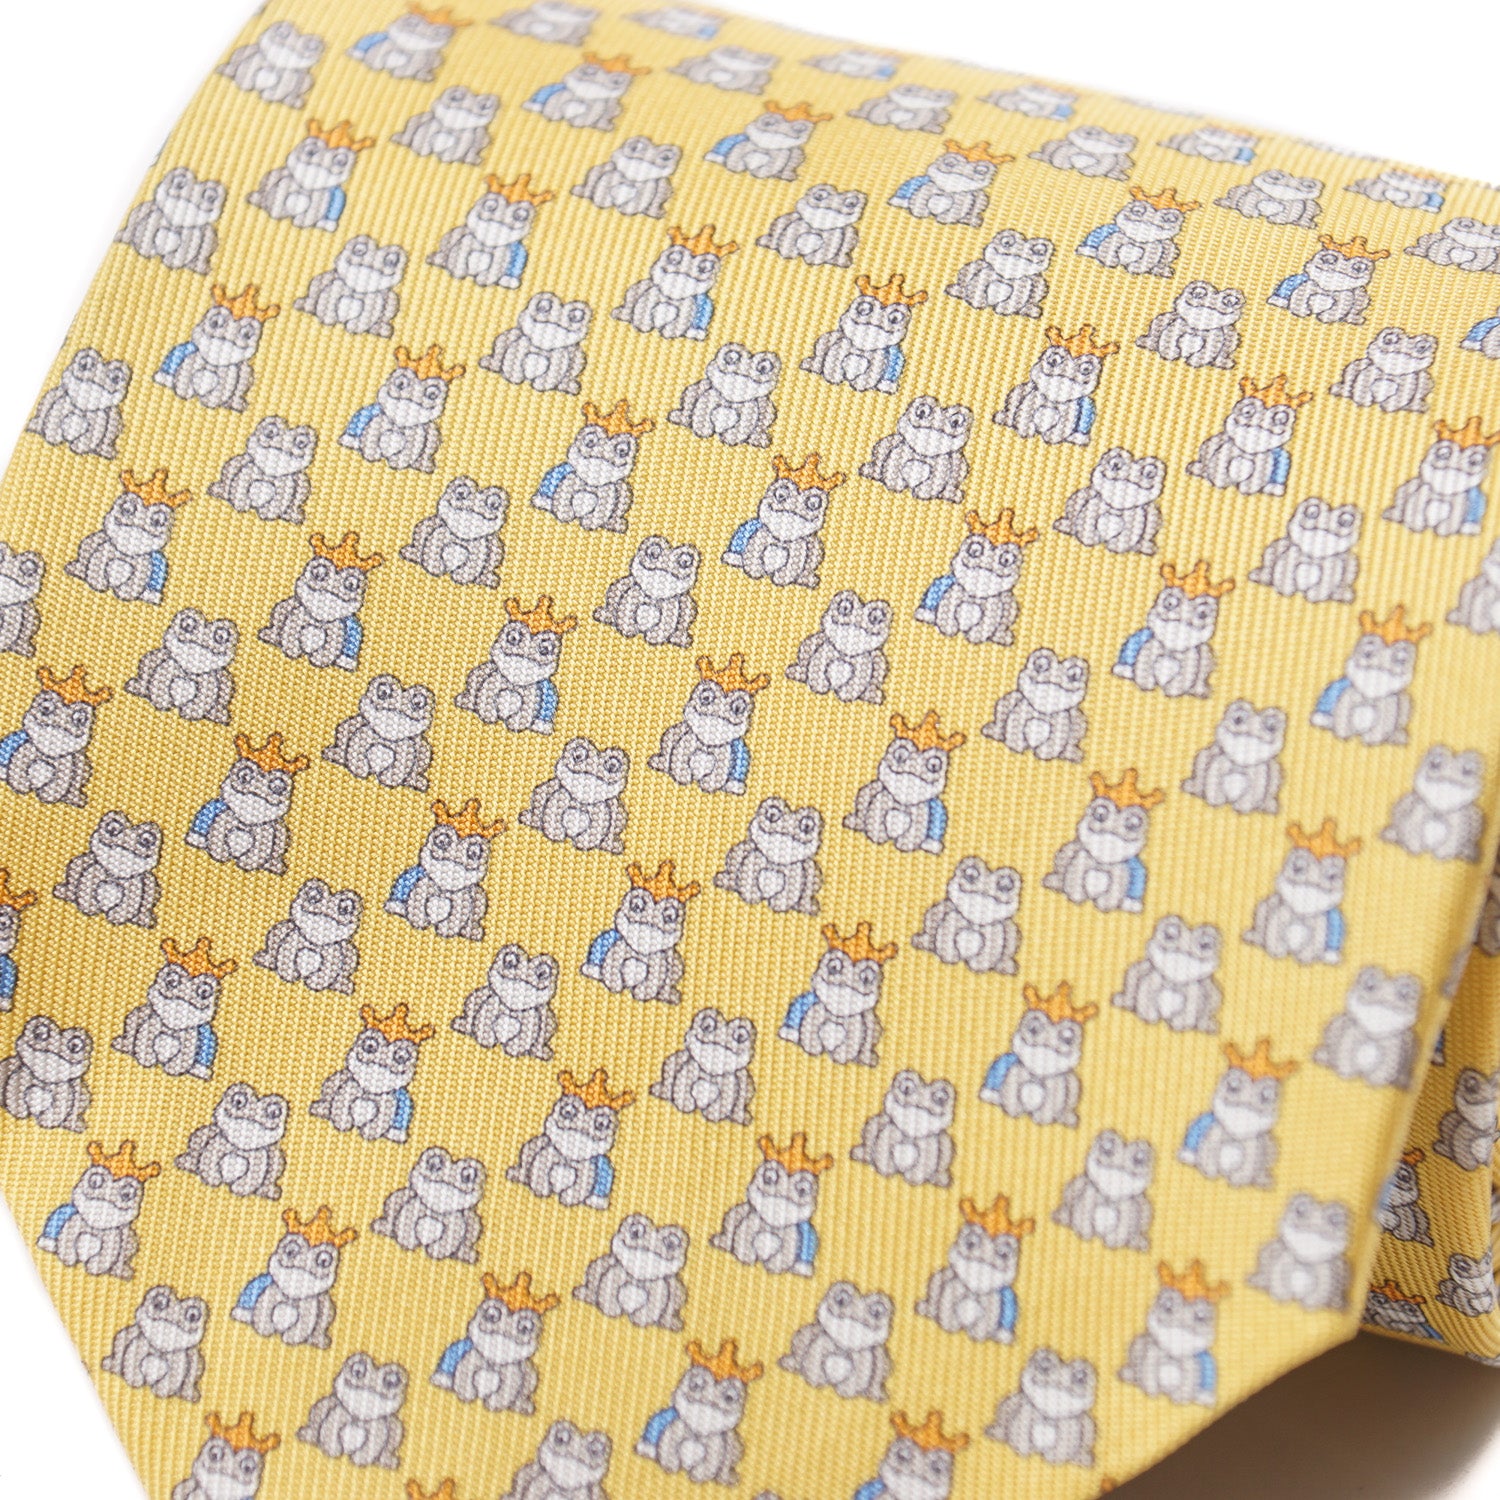 Salvatore Ferragamo Frog Prince Print Tie - Top Shelf Apparel